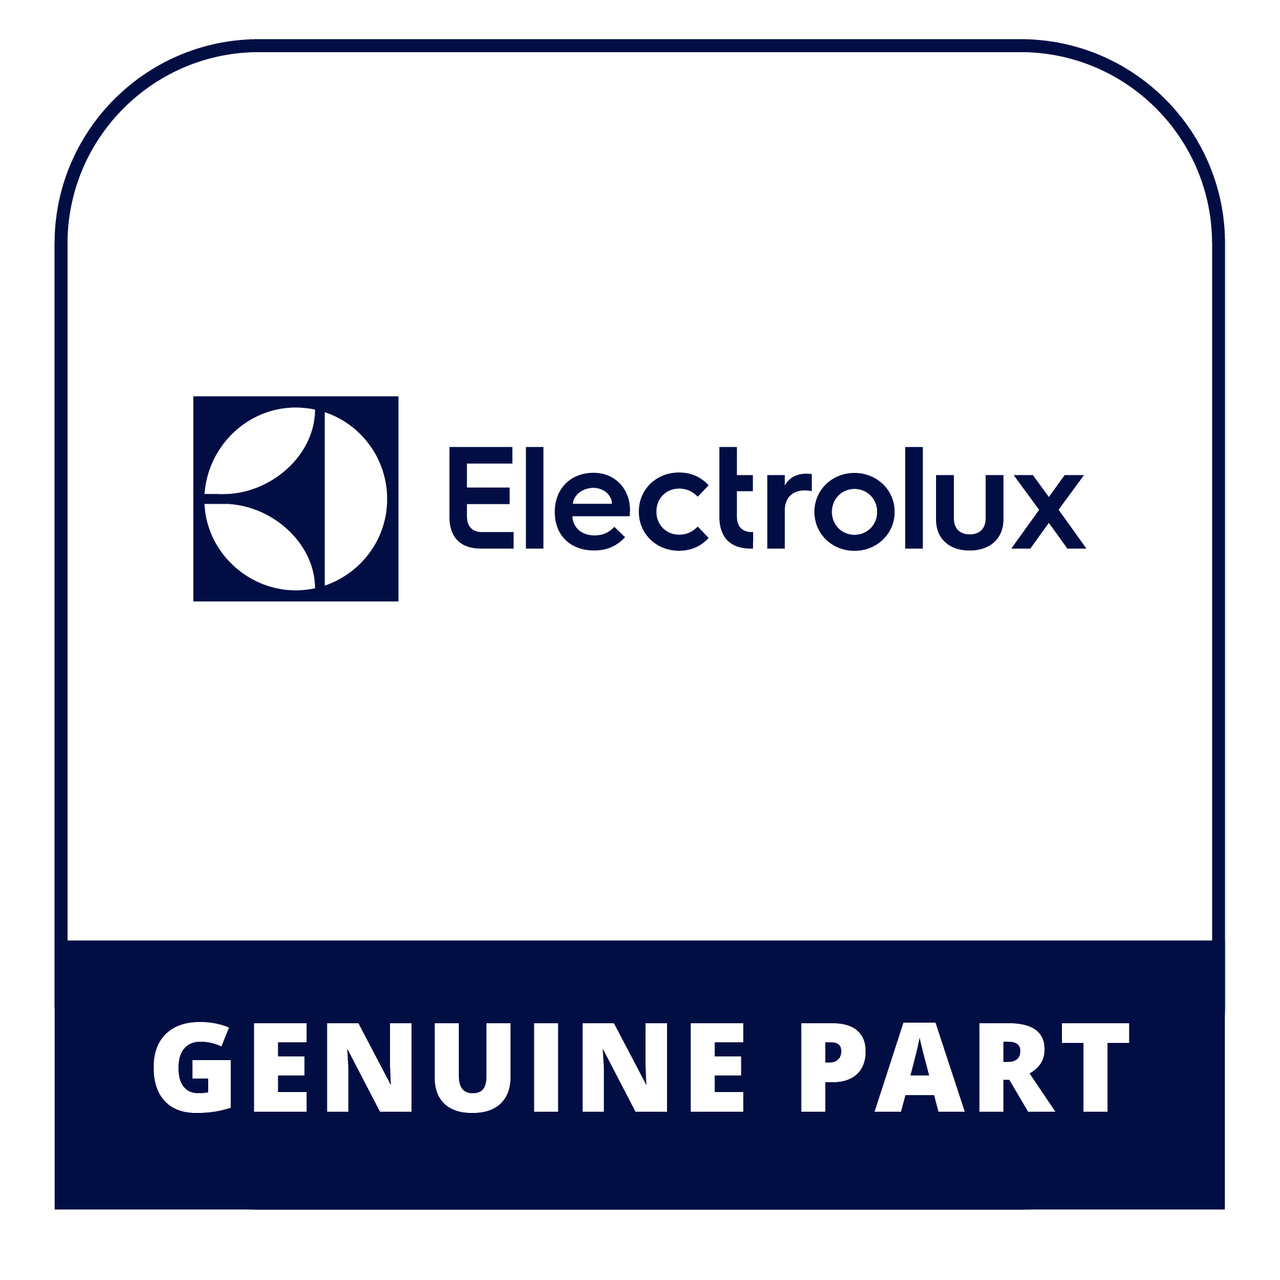 Frigidaire - Electrolux 318053326 Seal - Genuine Electrolux Part